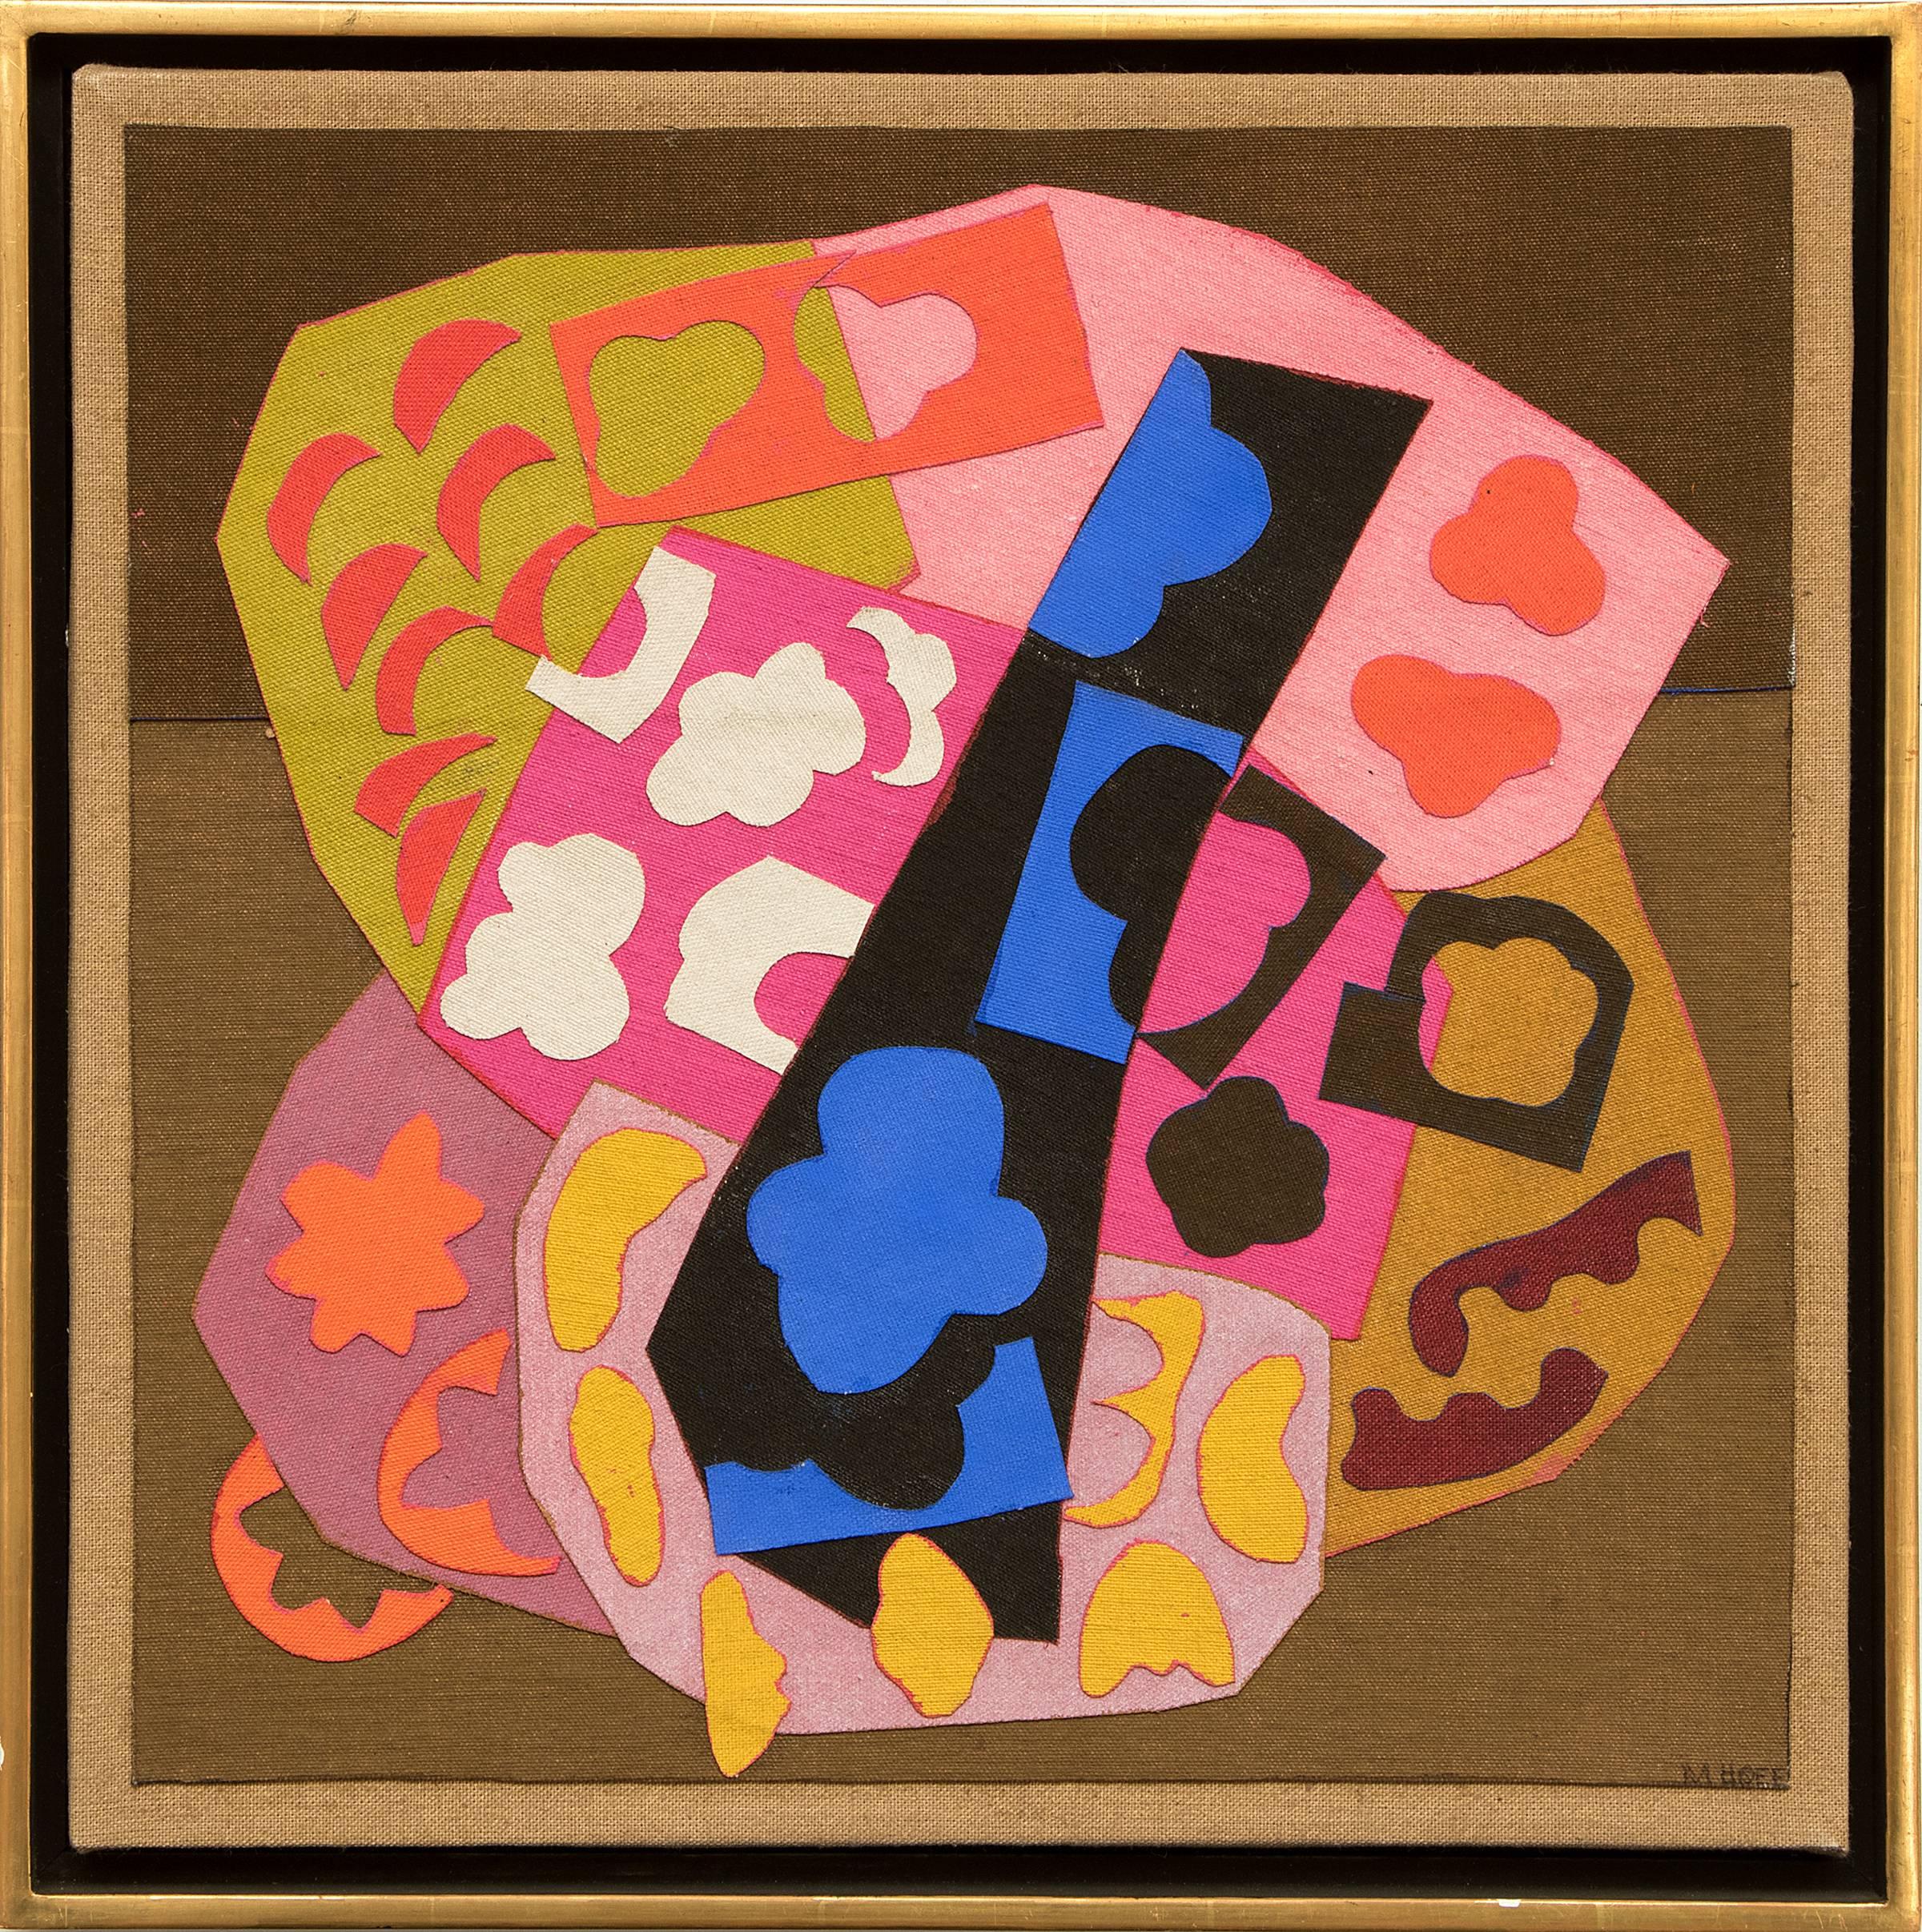 Abstract Painting Margo Hoff - Shop de tissus, collage de peinture abstraite : rose, bleu, vert, noir, orange, vert